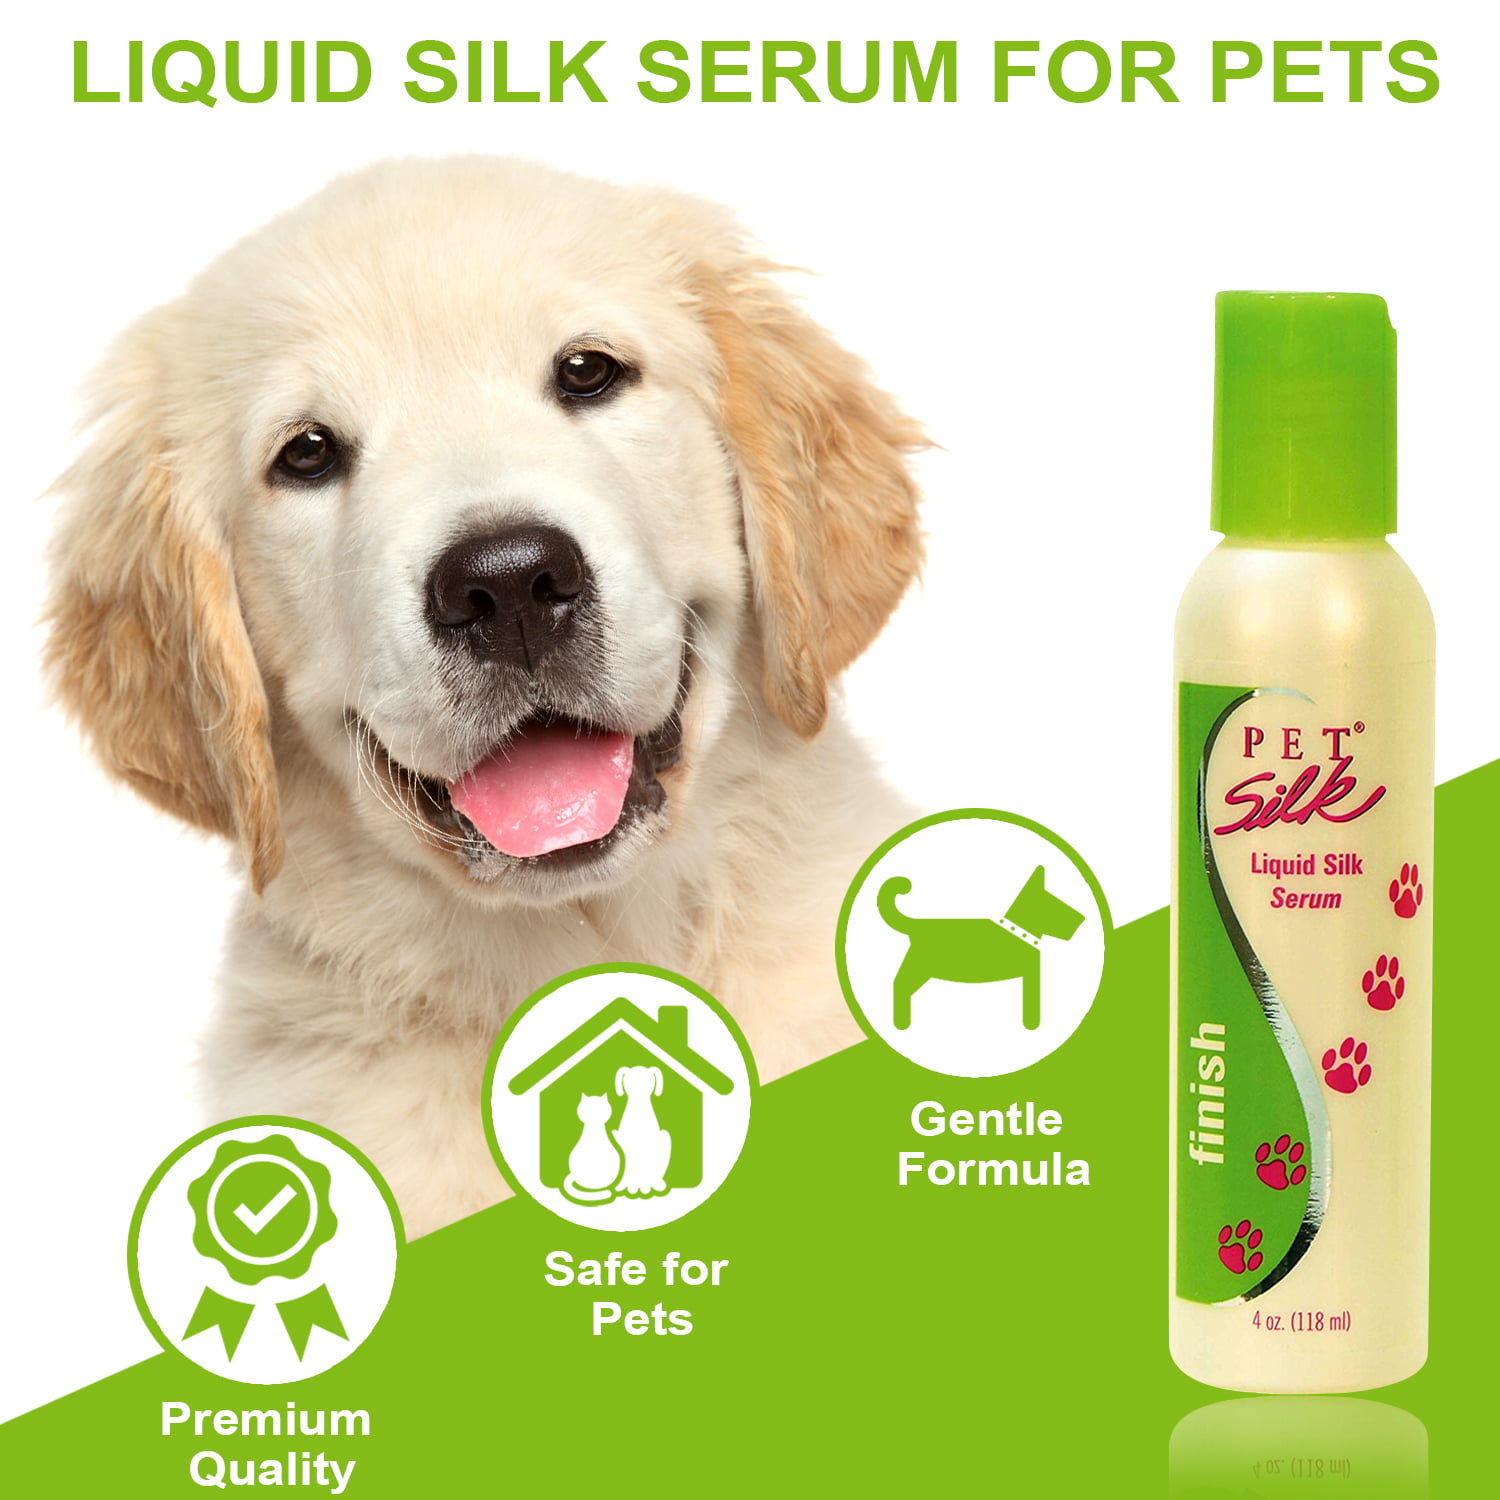 PS1052 Oz. Liquid Silk Serum - Walmart.com